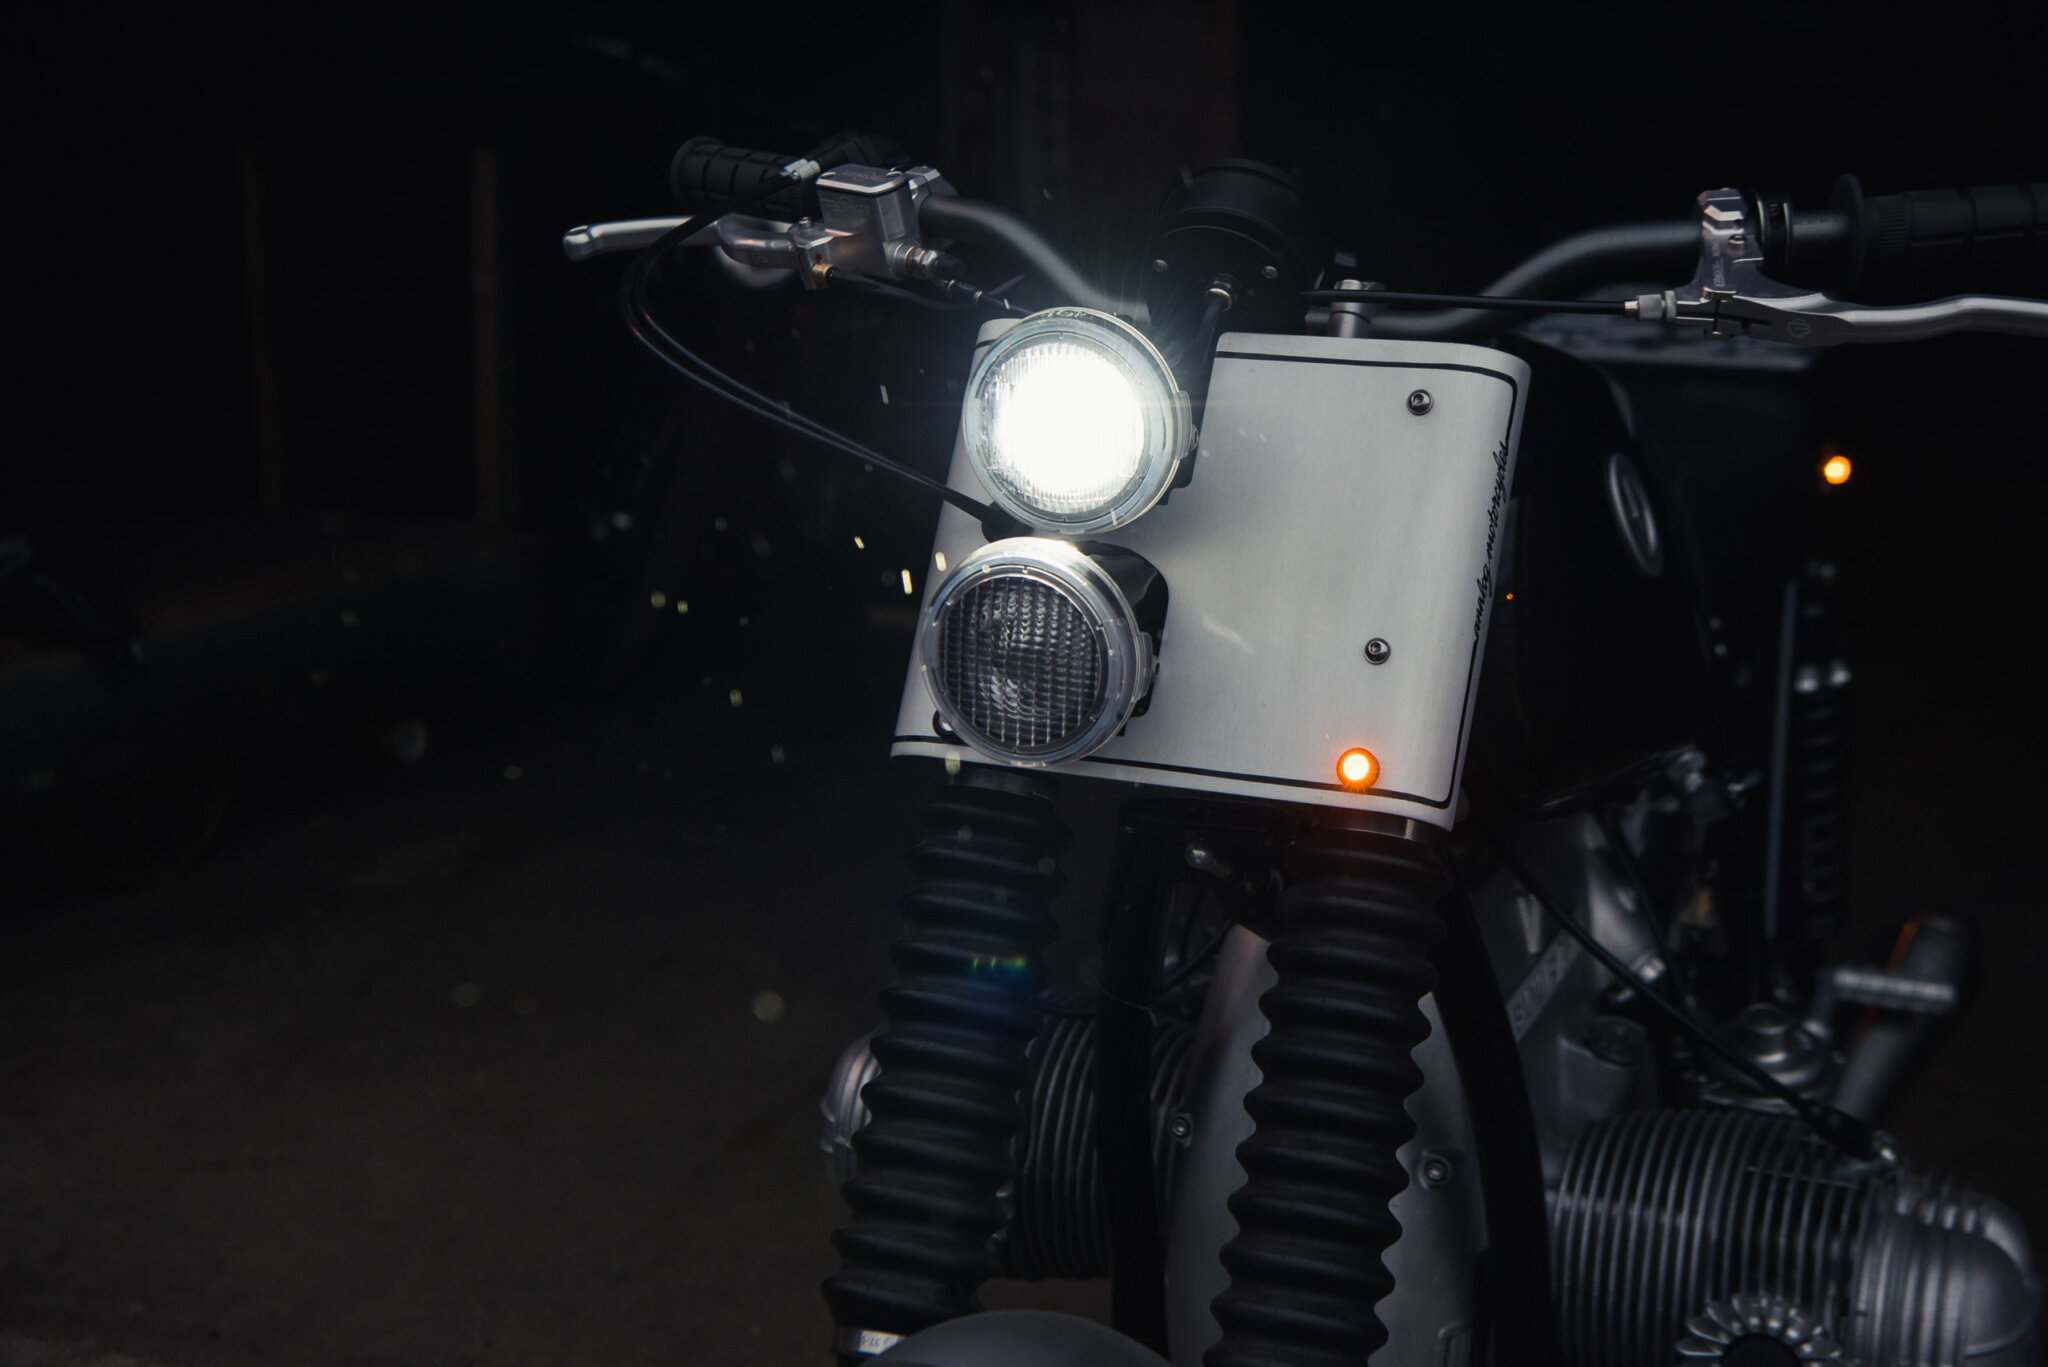 Carbon Universal Motorcycle Bike LED Bulb Blinkers Turn Signal Indicator 10mm 